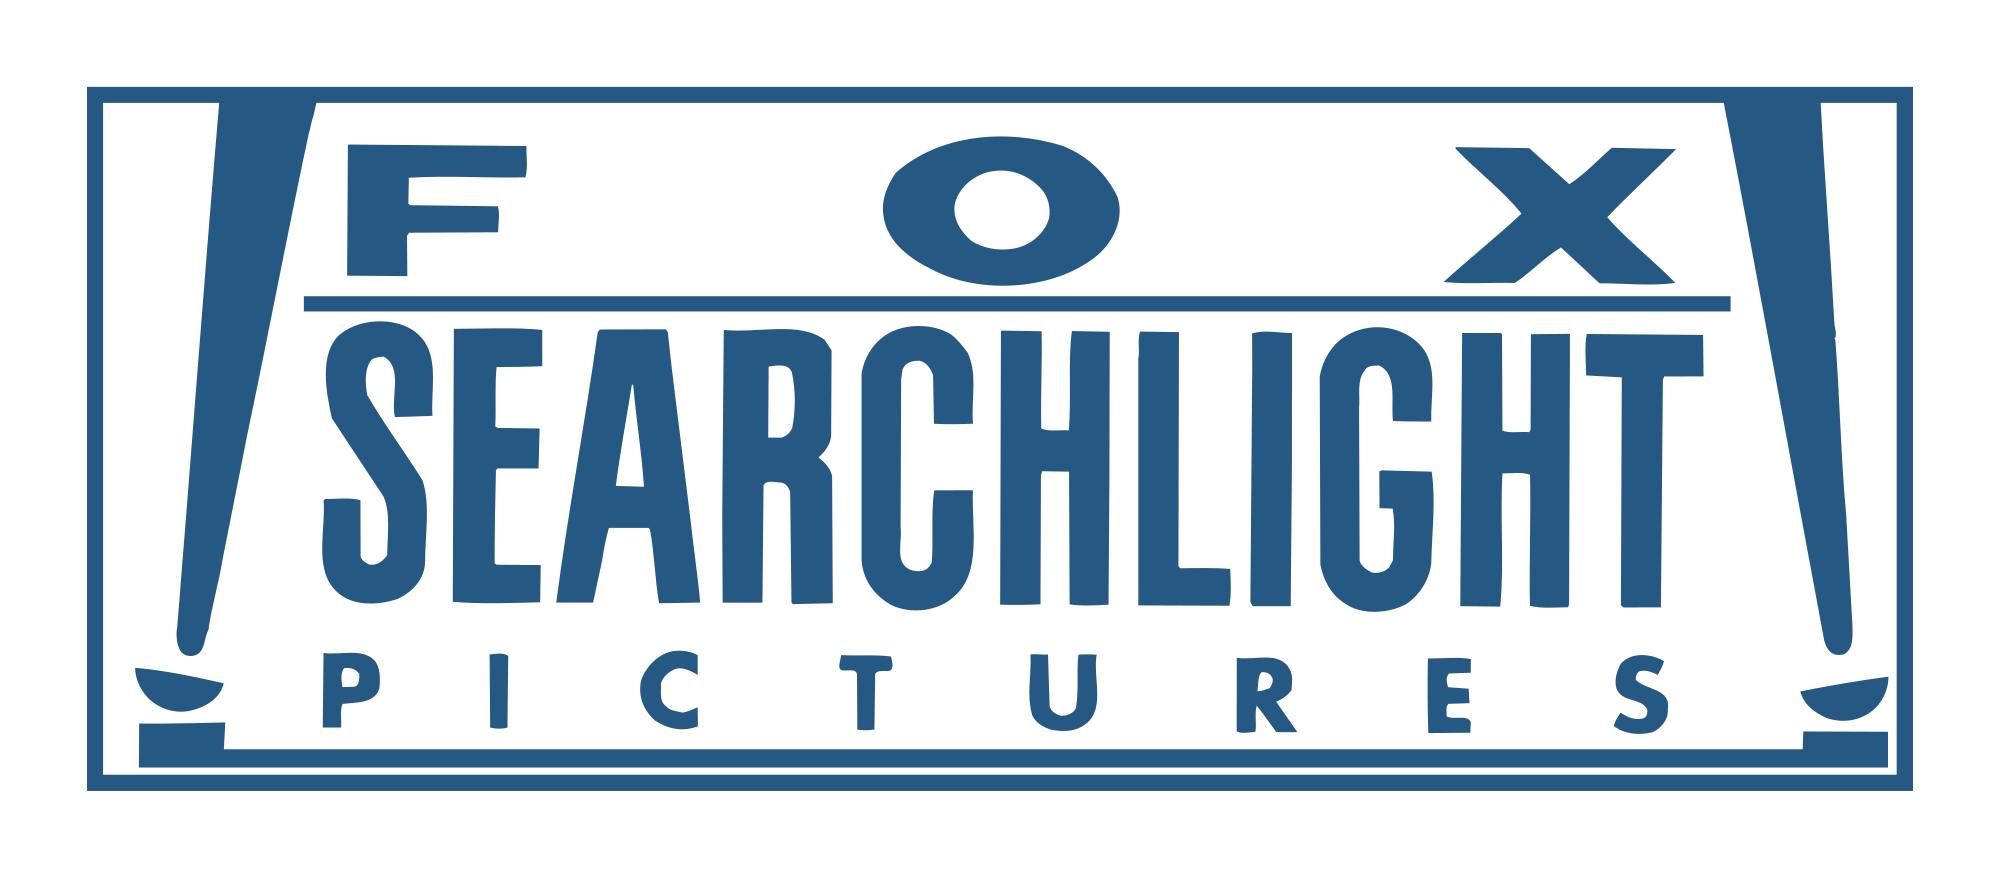 Fox Searchlight Pictures Logo - Fox Searchlight Picture Logo.svg